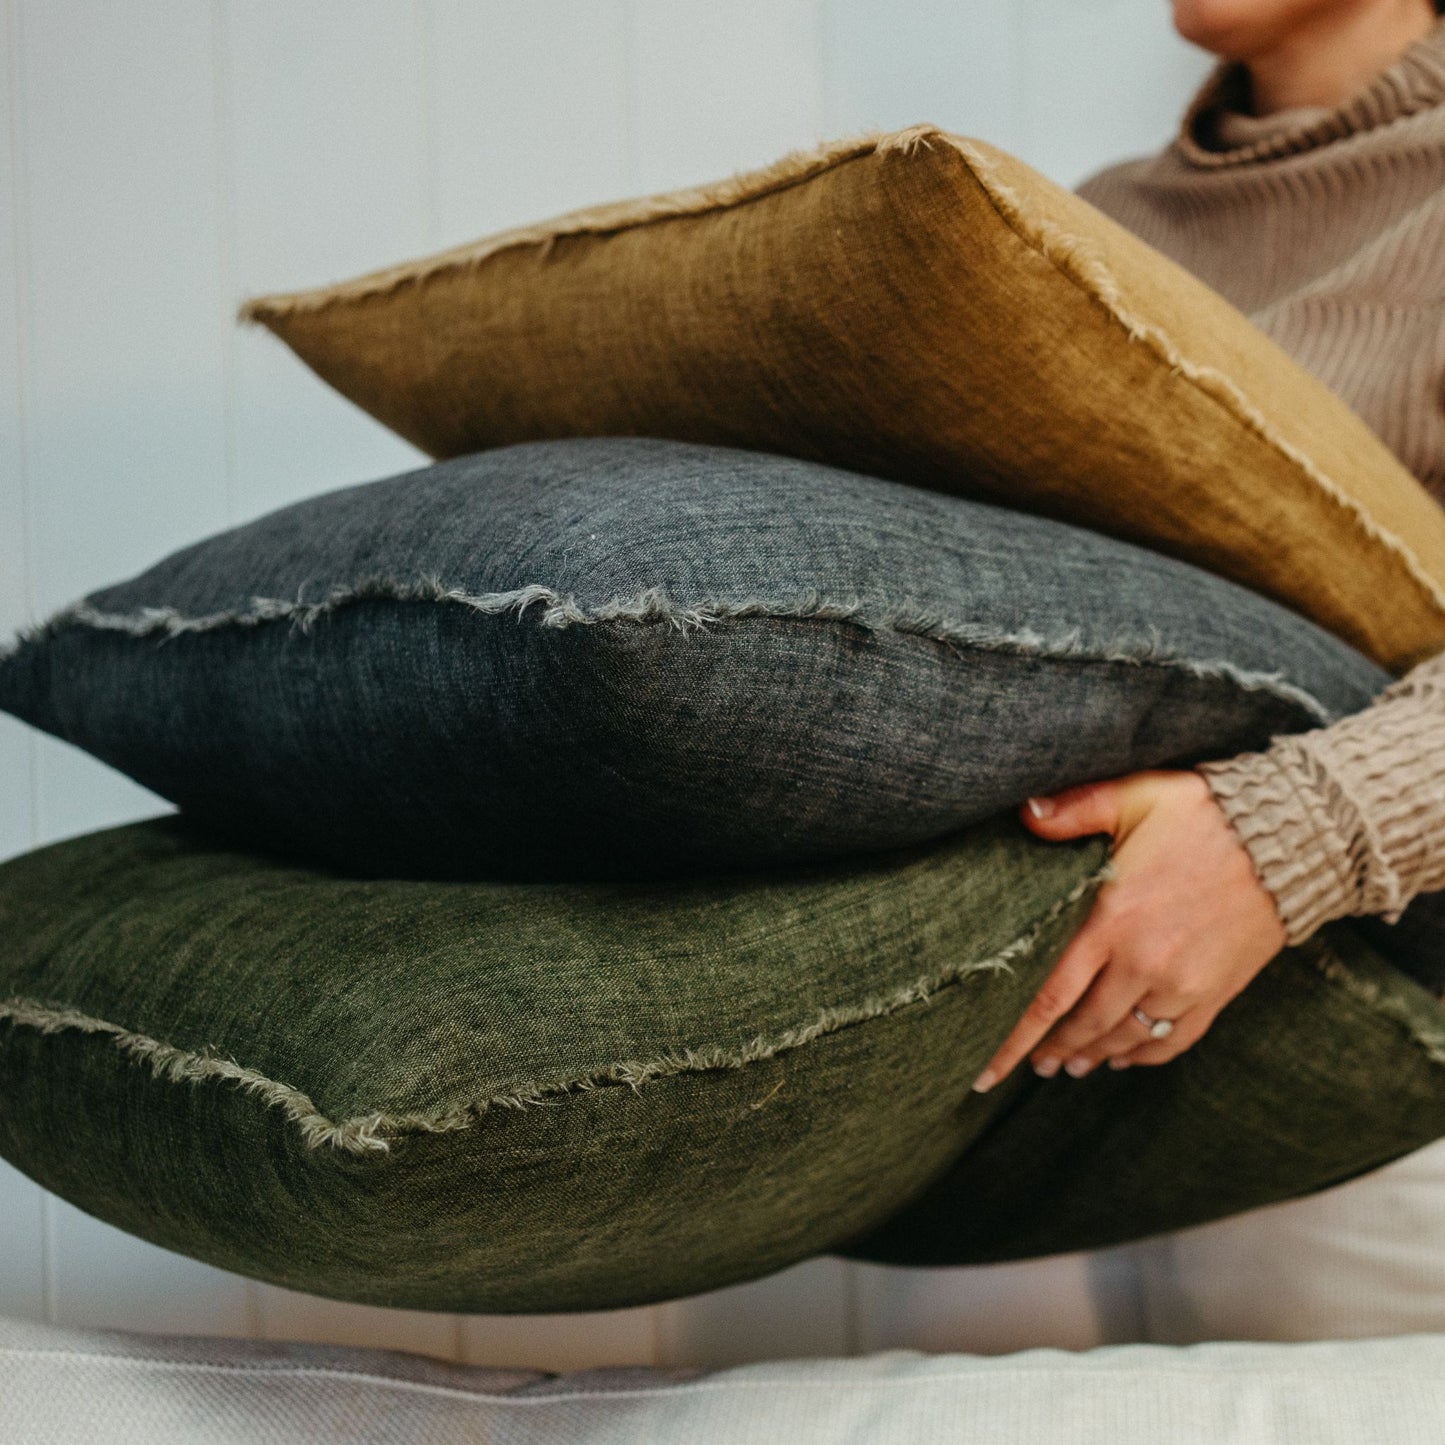 Lina Linen Pillow | Charcoal